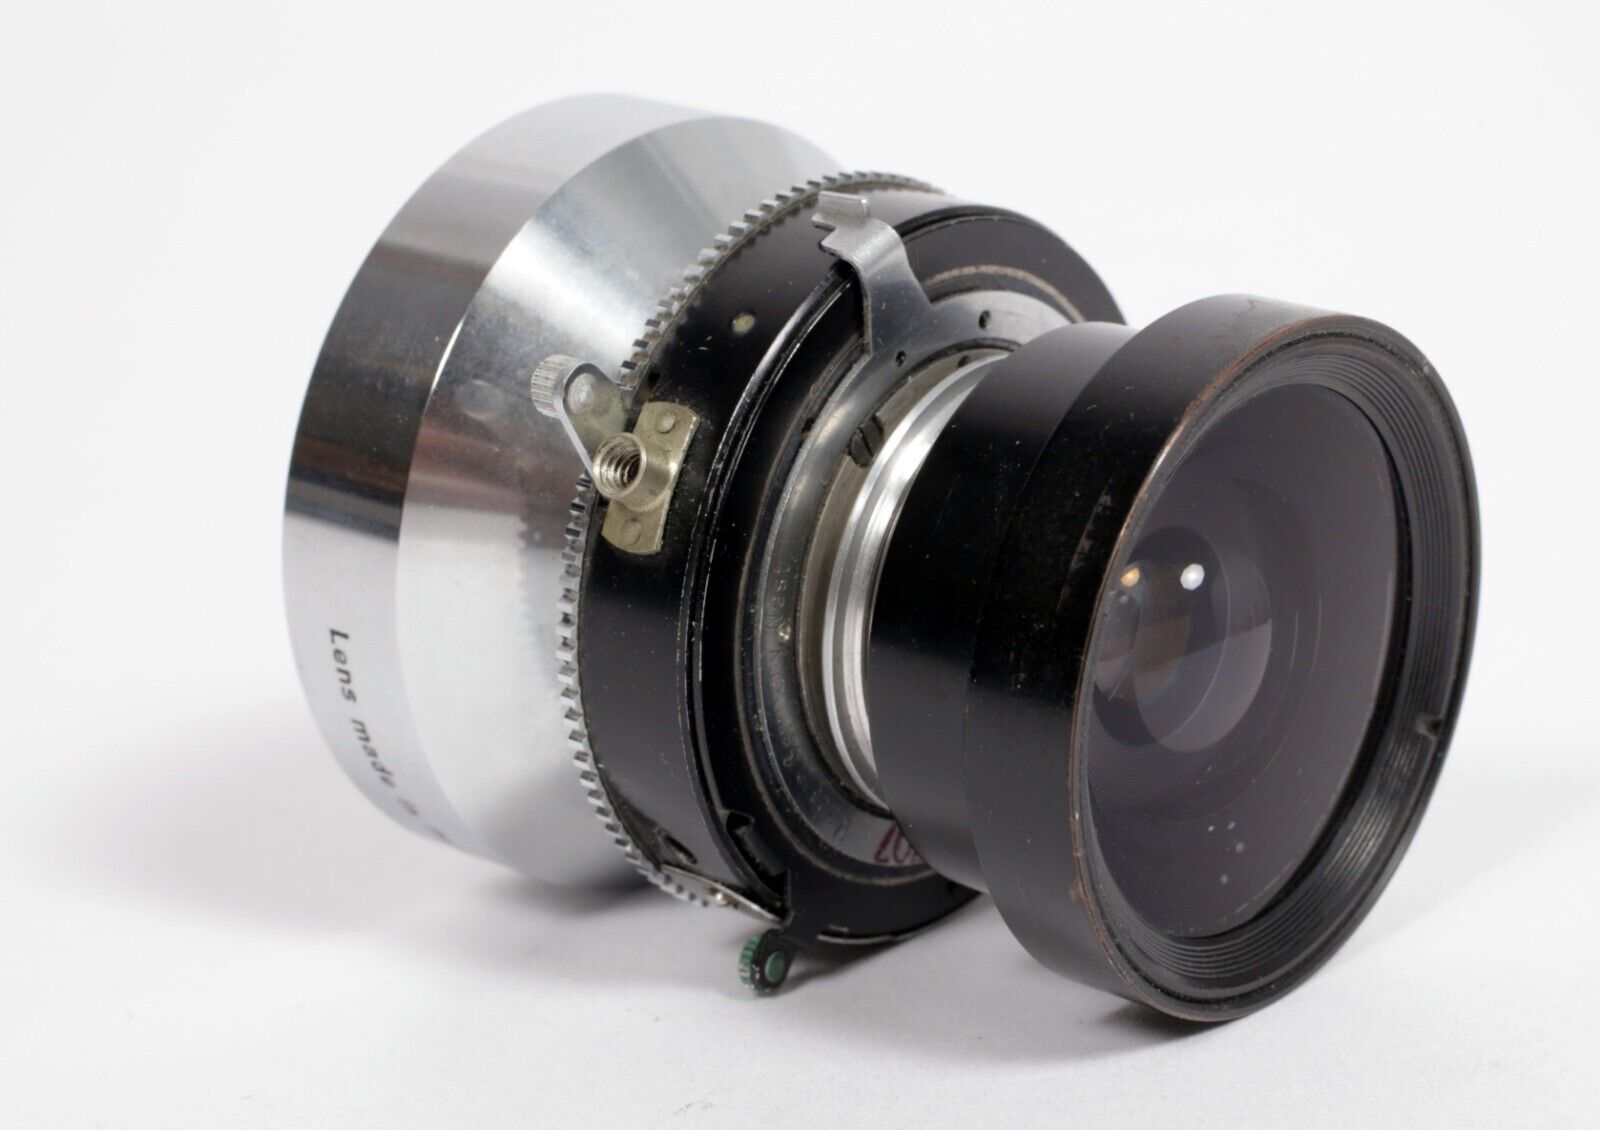 Schneider Super Angulon 65mm F8 lens in Compur #00